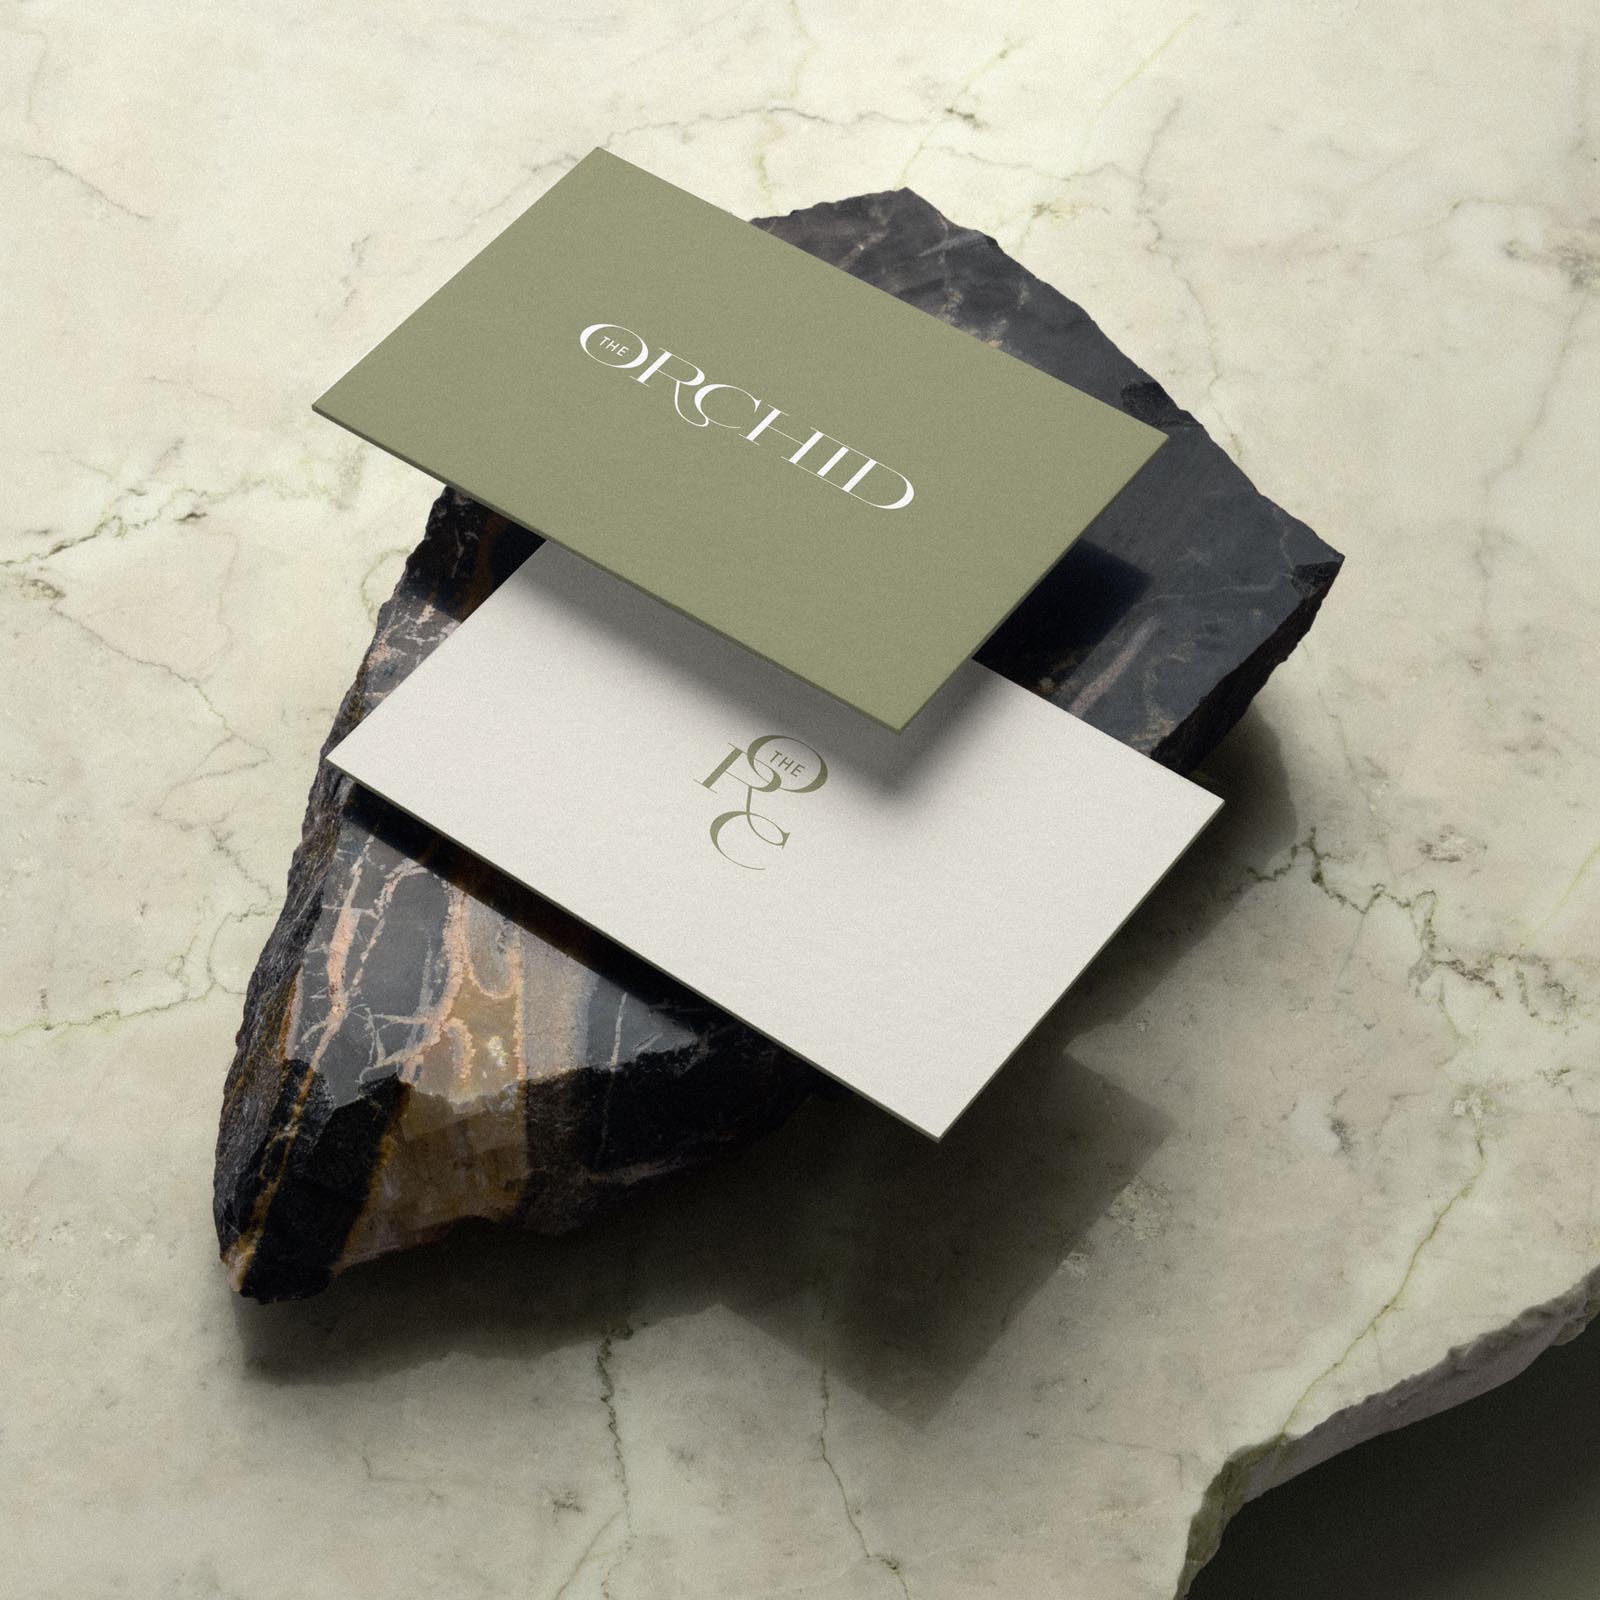 Orchid-Luxury-Elegant-Brand-Identity-Branding01